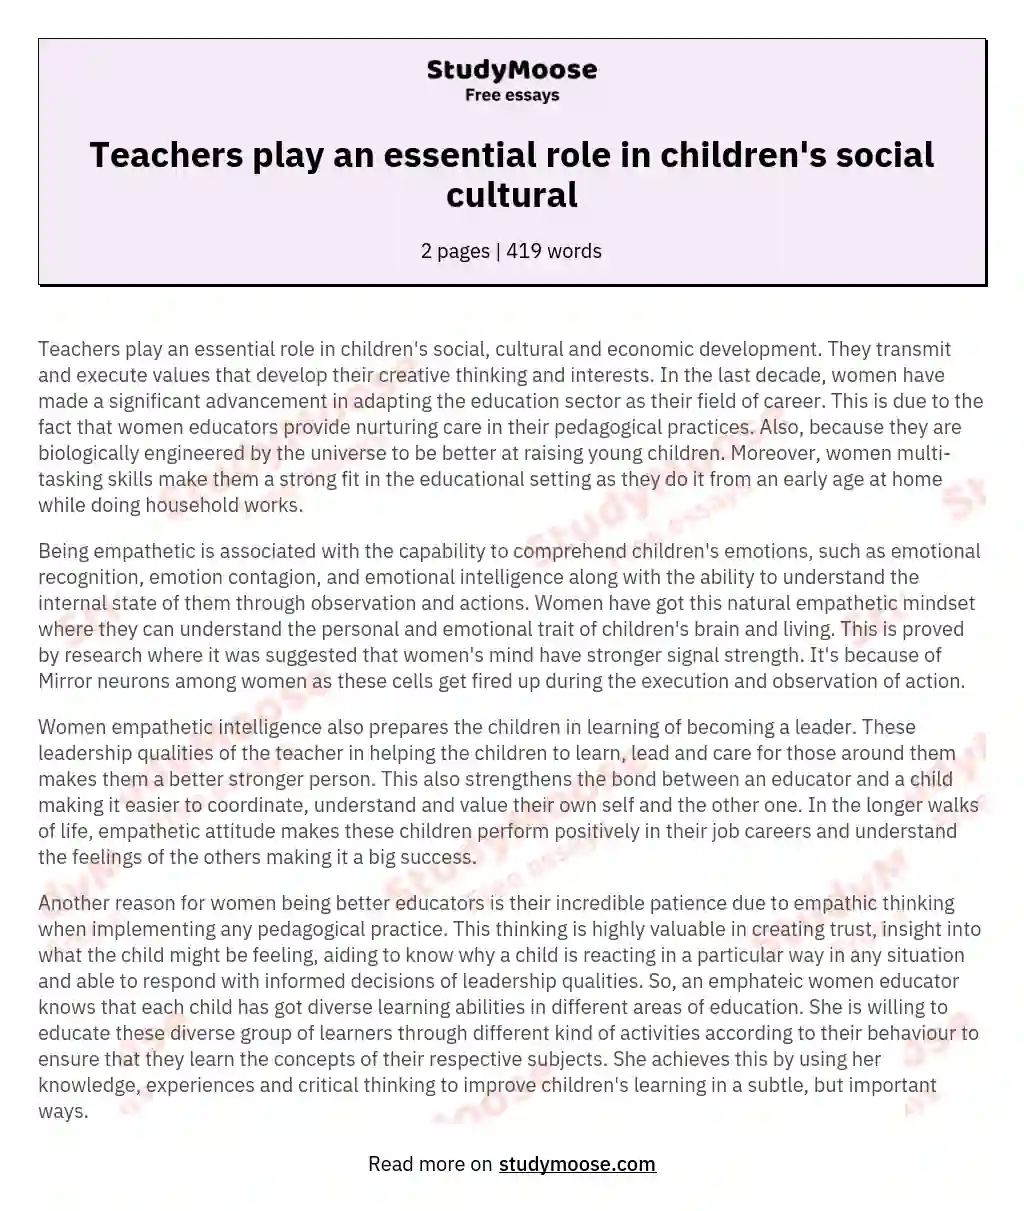 Teachers play an essential role in children's social cultural